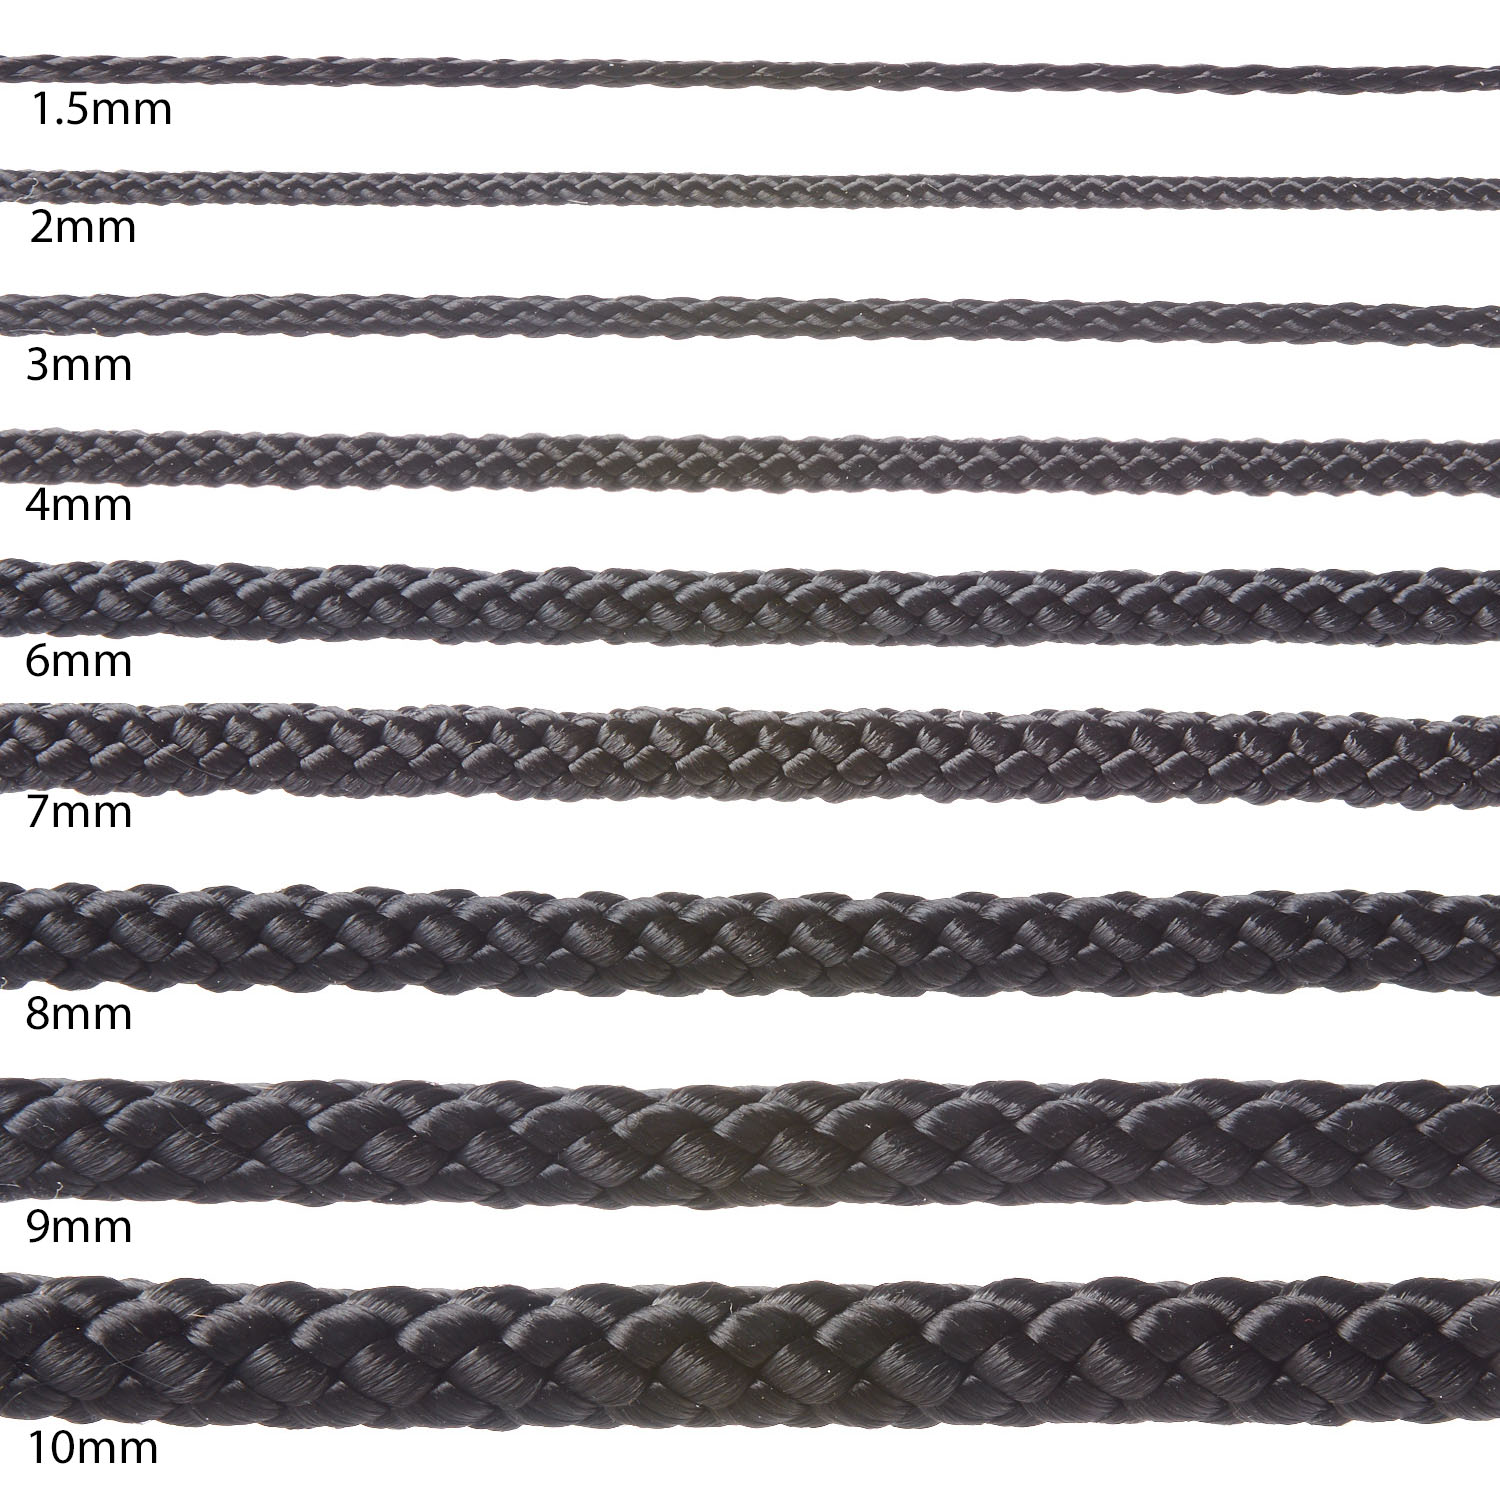 Polypropylene Braided Cords Sizes 1.5mm 2mm 3mm 4mm 6mm 7mm 8mm 9mm 10mm